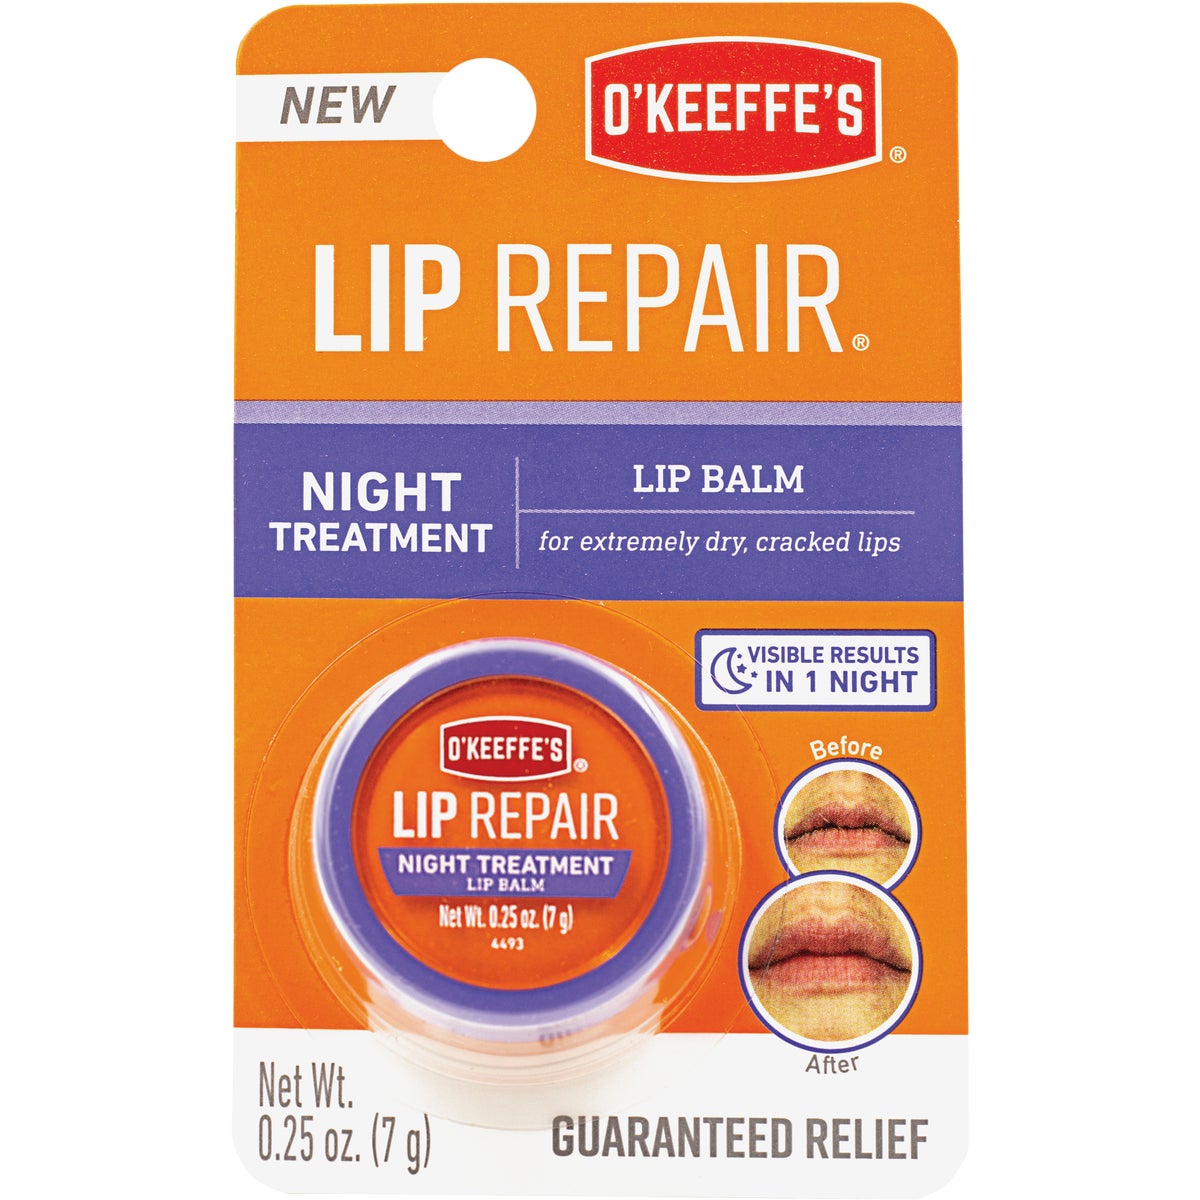 O'Keeffe's 0.25 Oz. Lip Repair Night Treatment